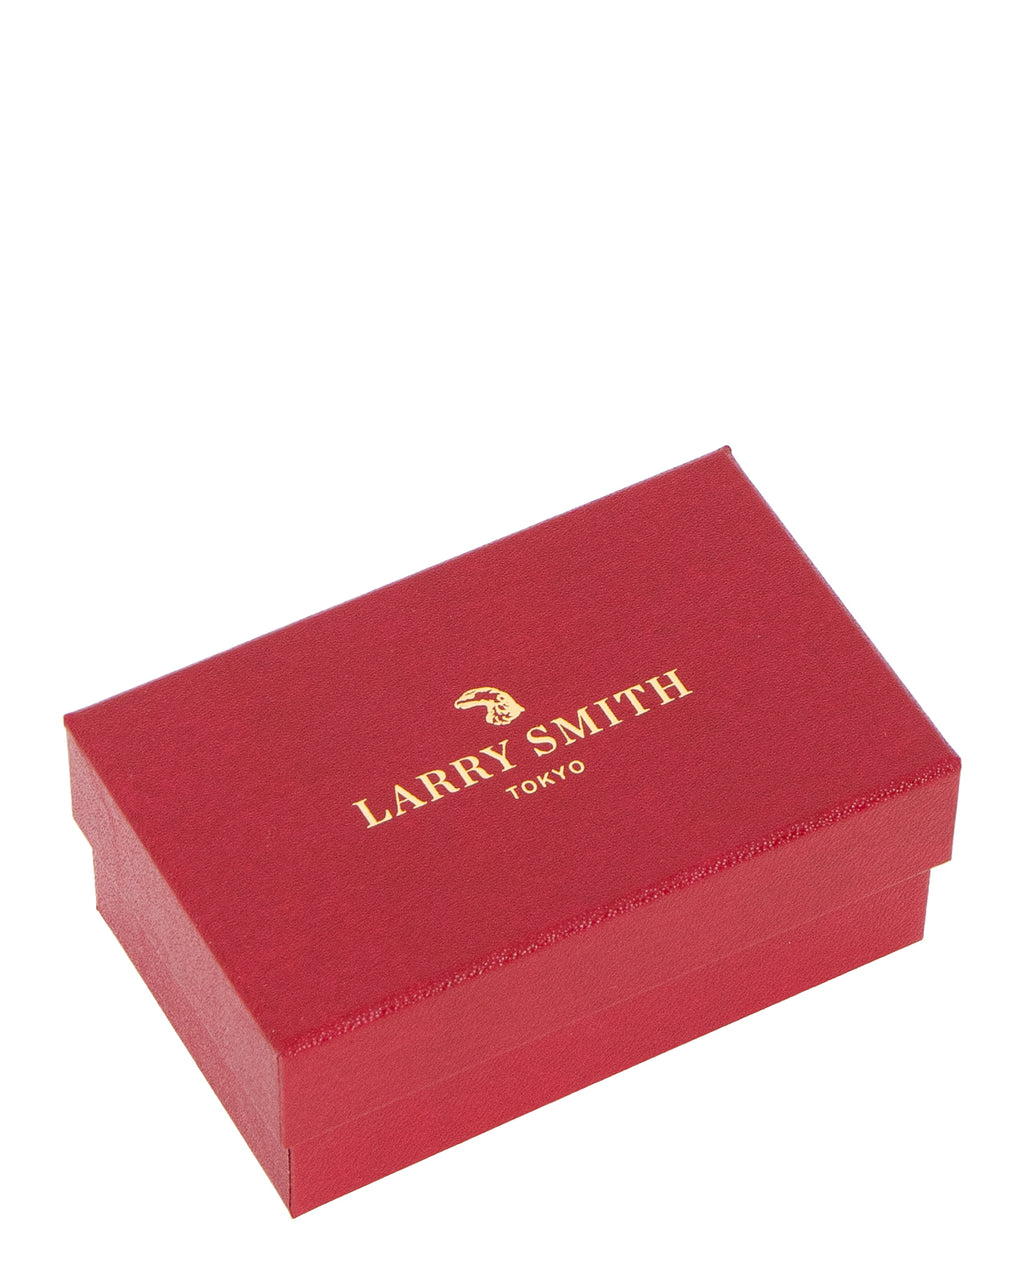 Larry Smith Thin Triangle Bracelet 3 Point